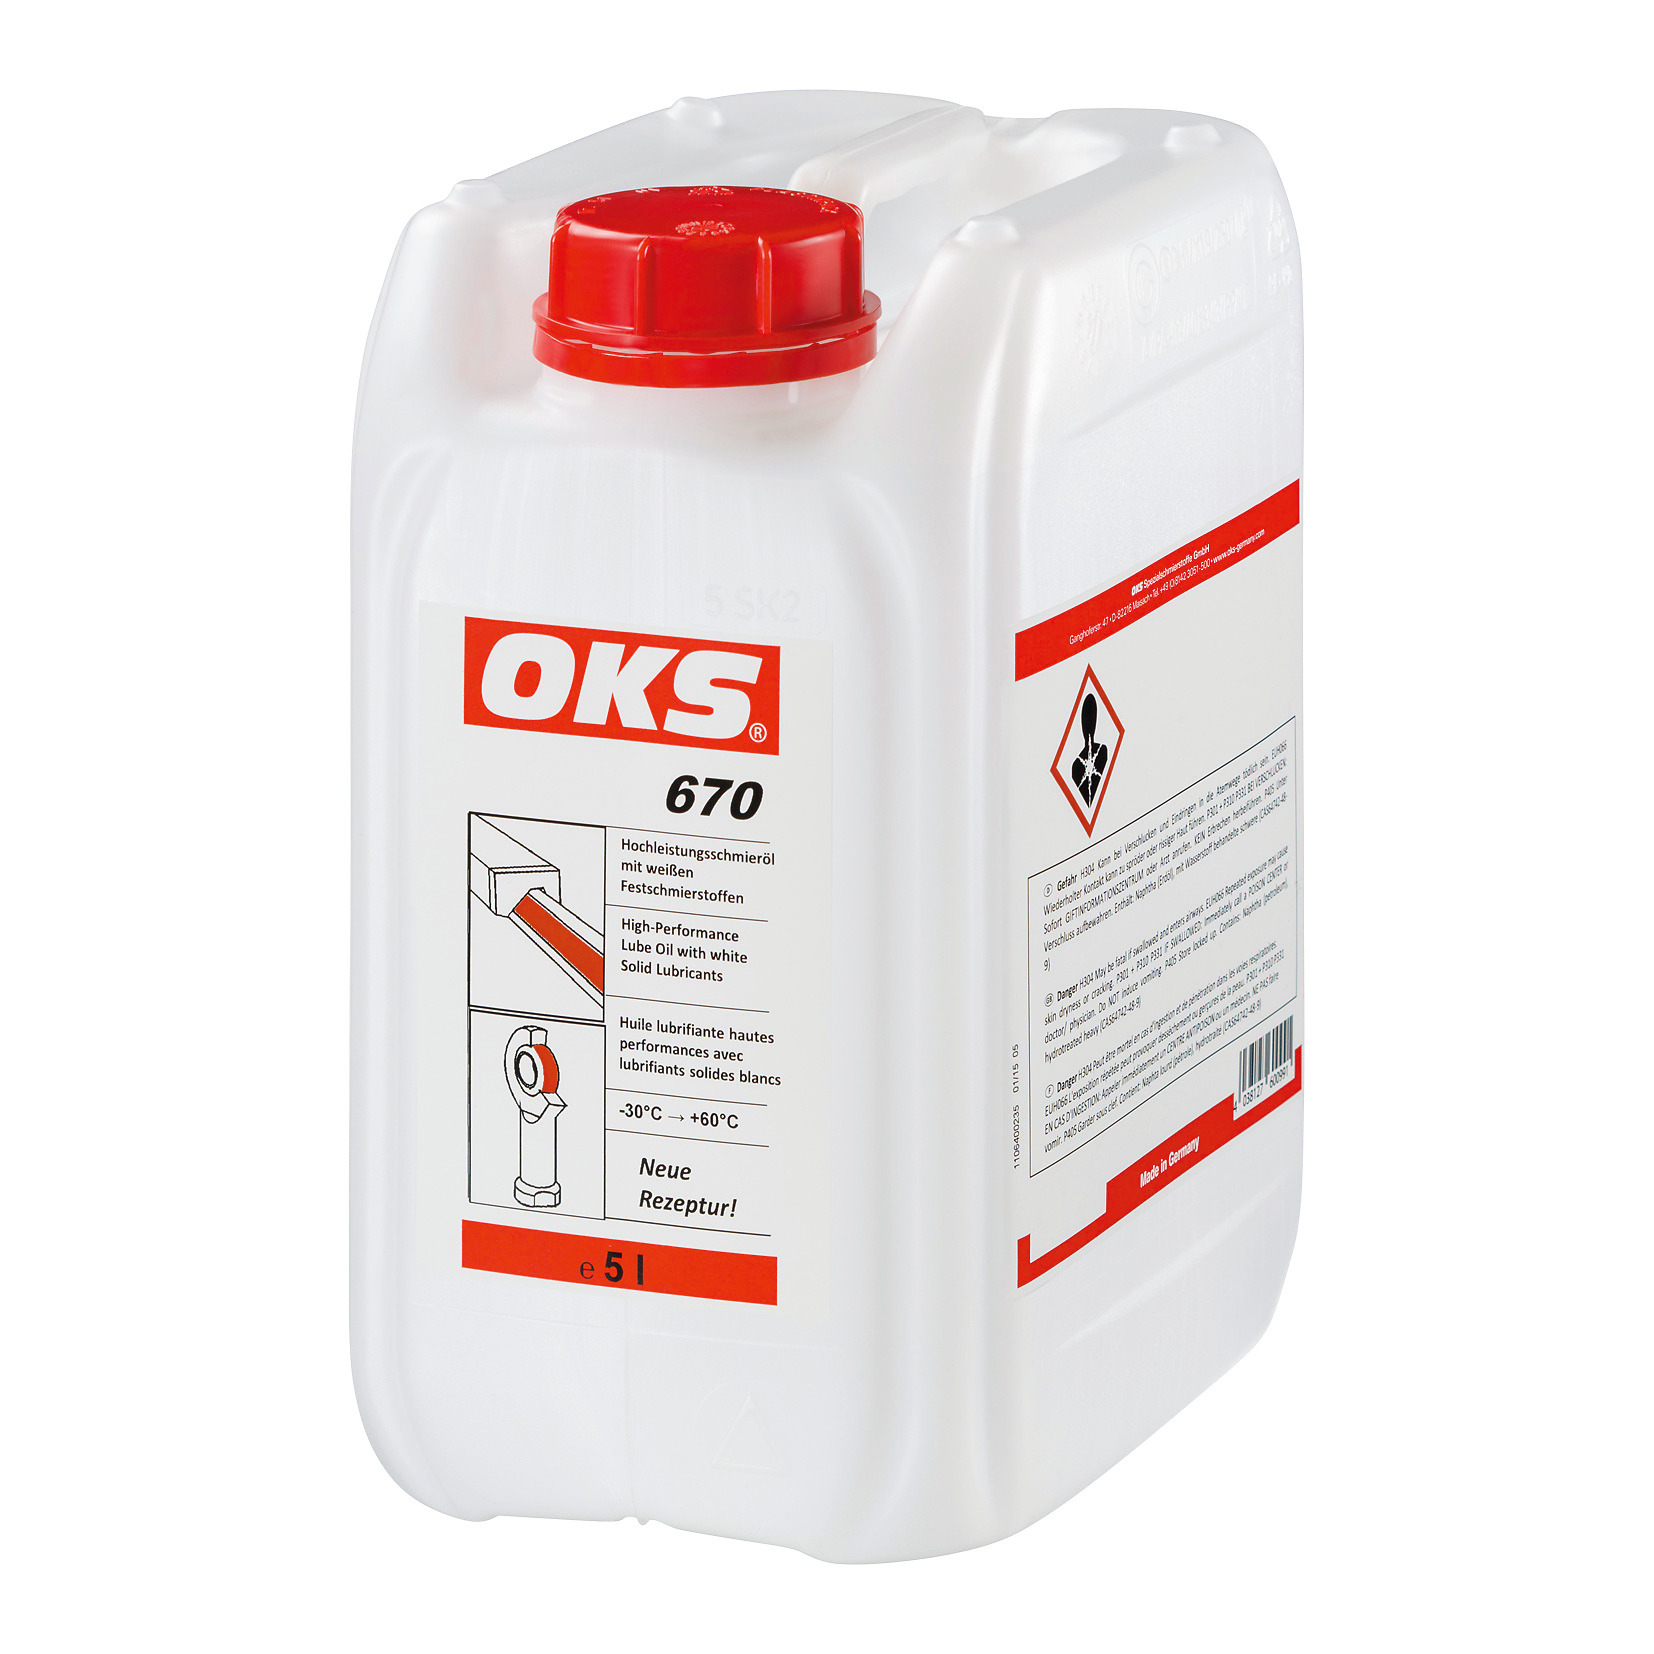 OKS0670-5 High-performance smeerolie met goede kruipende werking voor permanente smering van machinedelen die aan hoge drukken, stof of vocht worden blootgesteld.